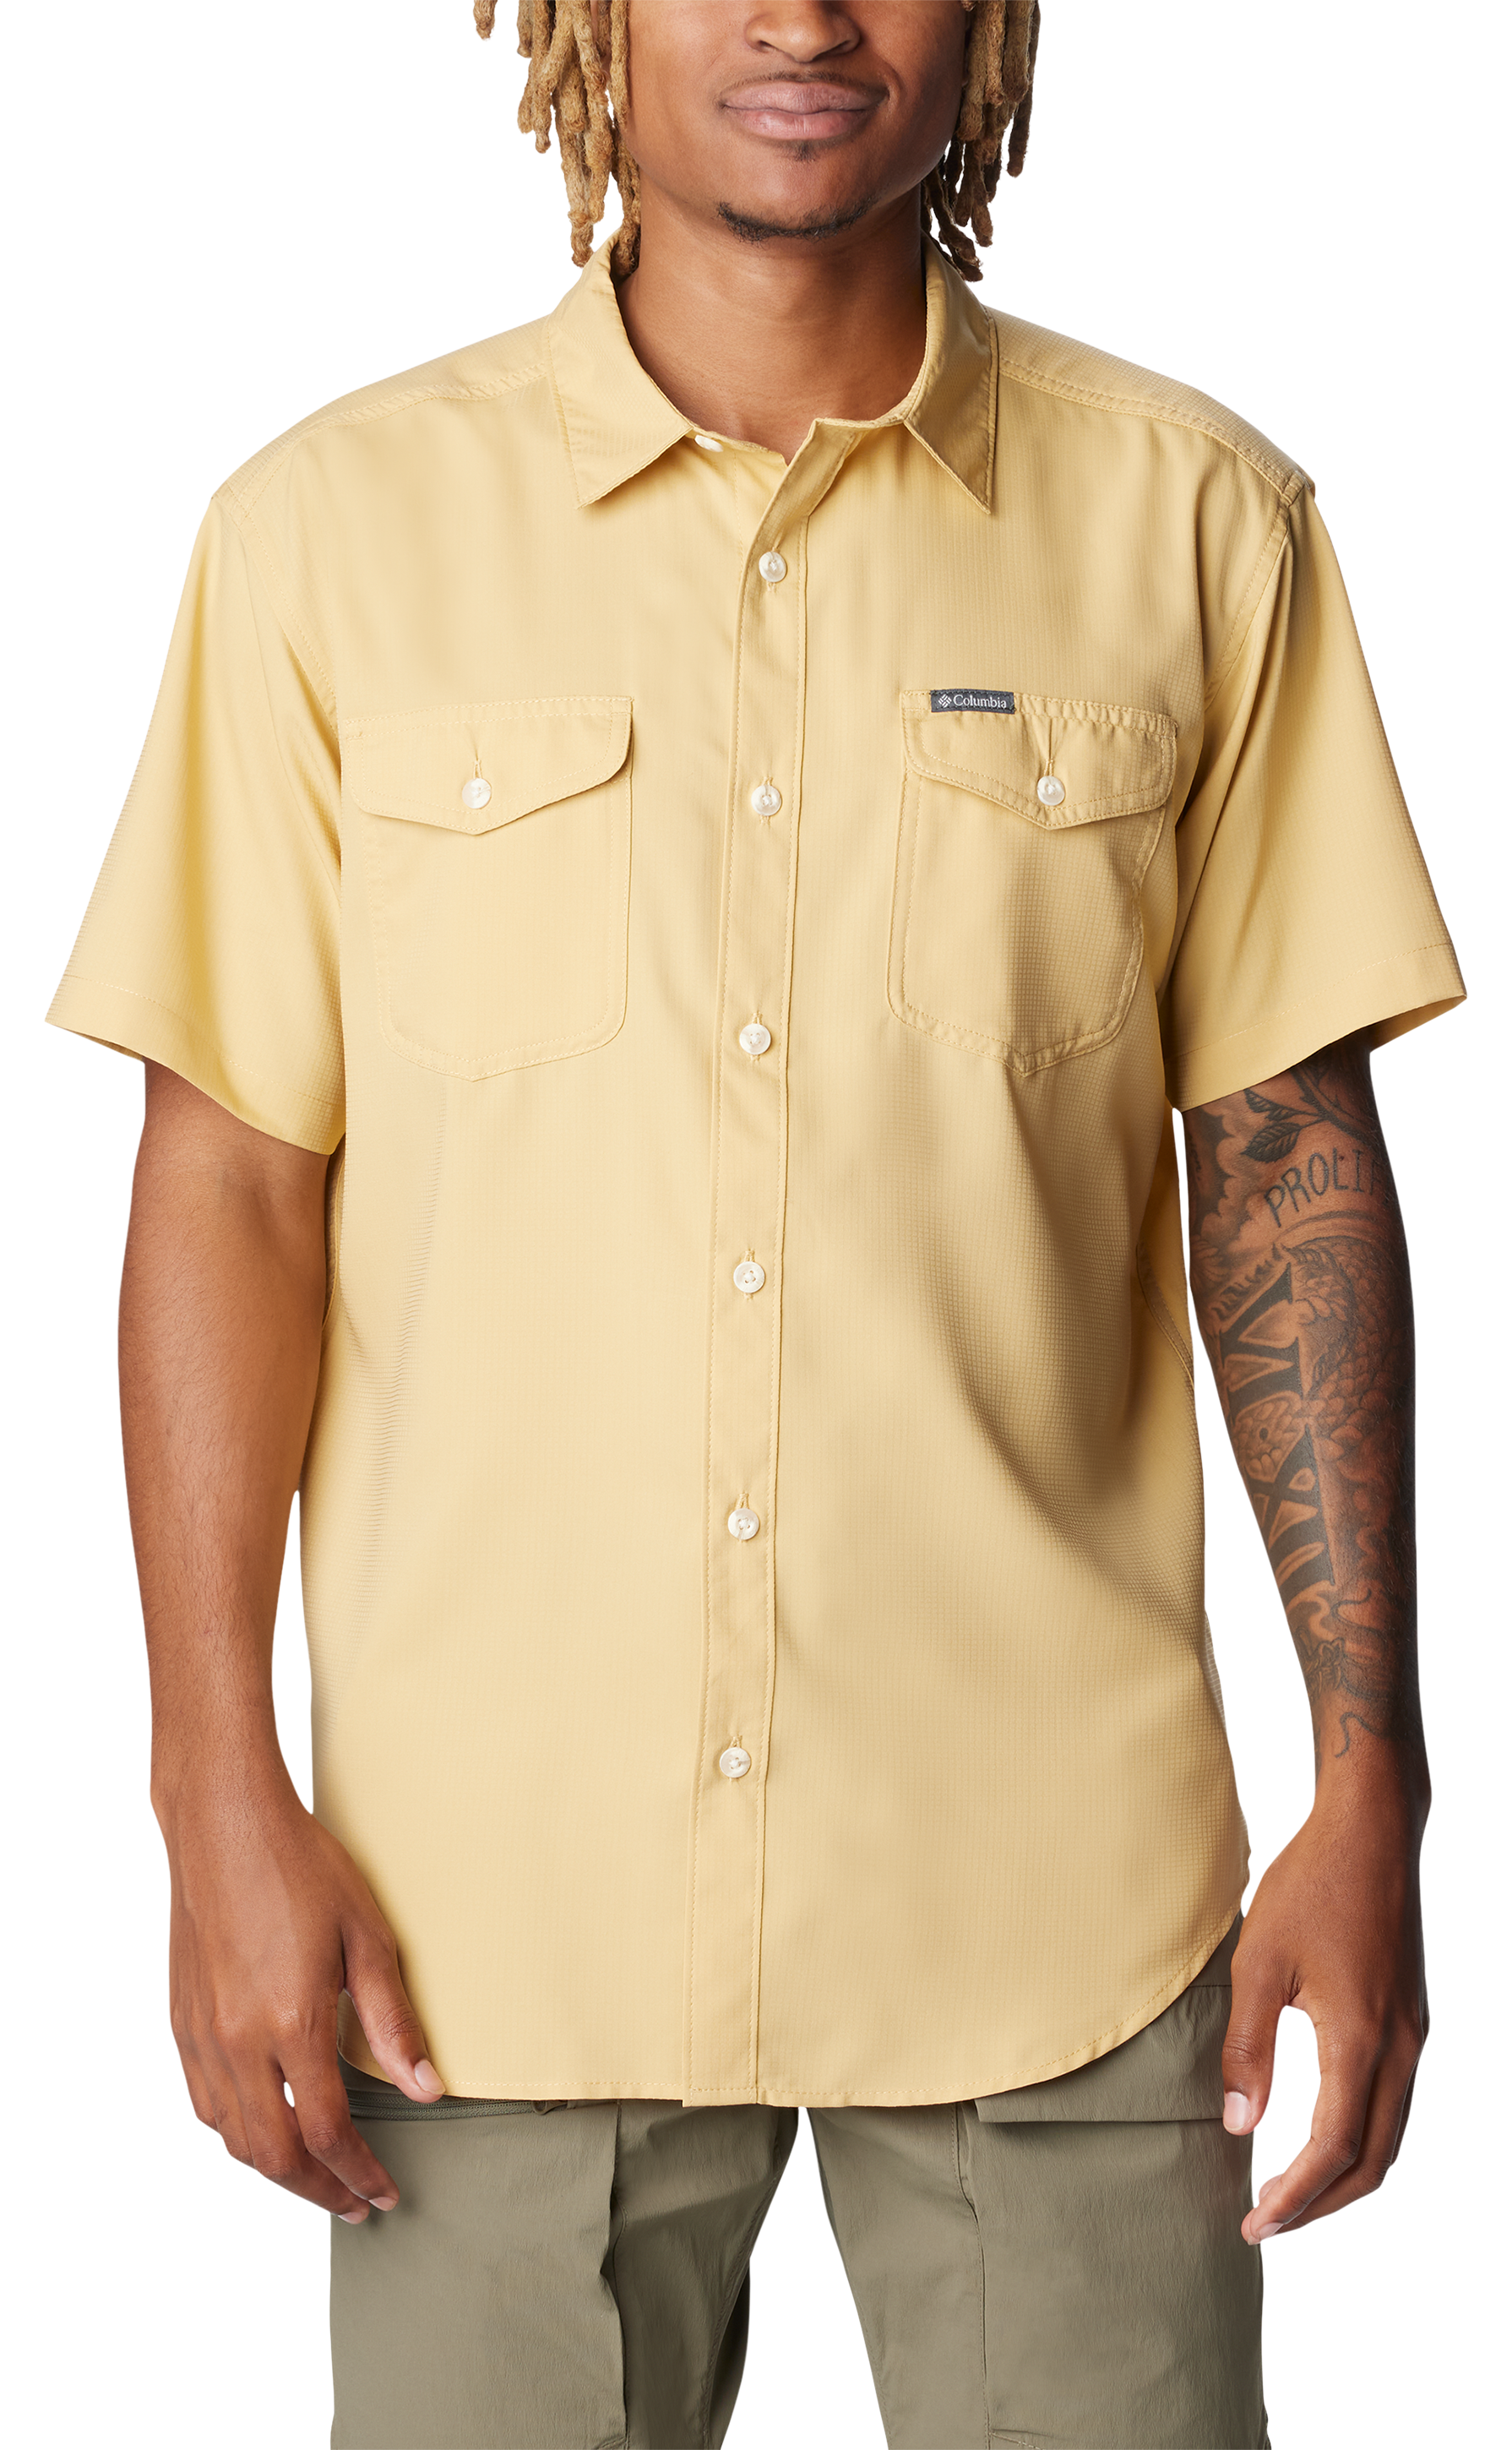 Men's Loose-fit, Casual Hawaiian Aloha Shirt size S-4XL Victoria